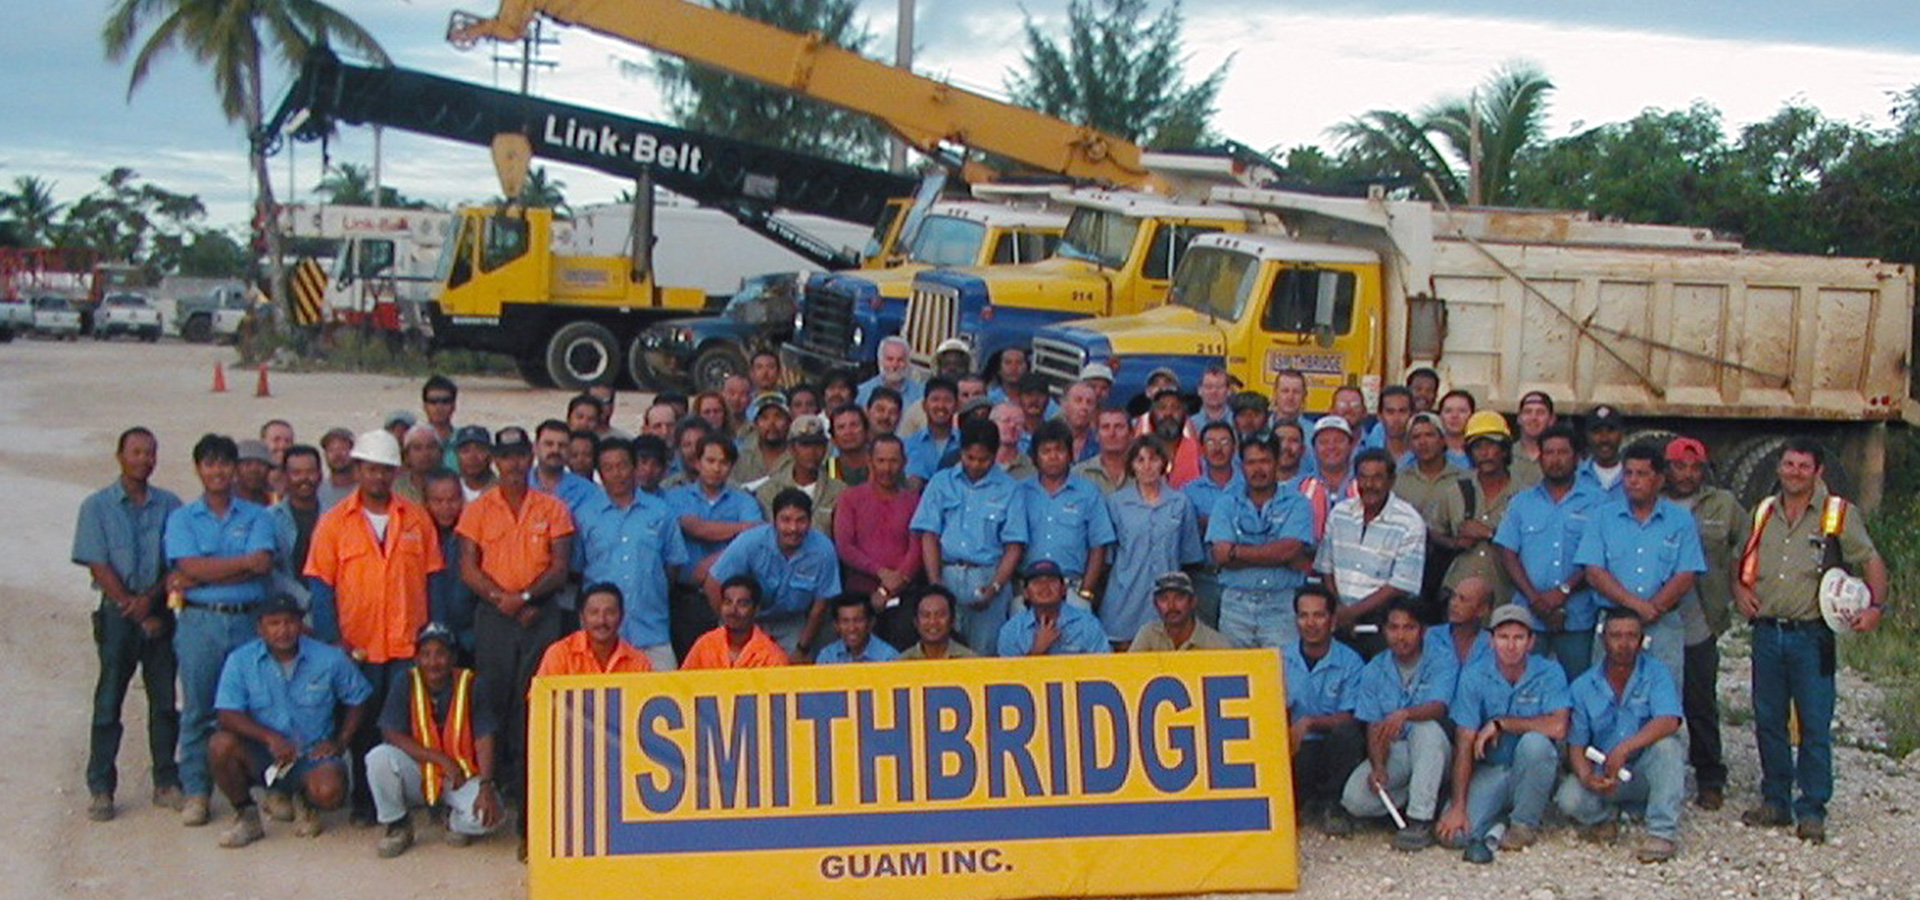 The Smithbridge Guam Crew 